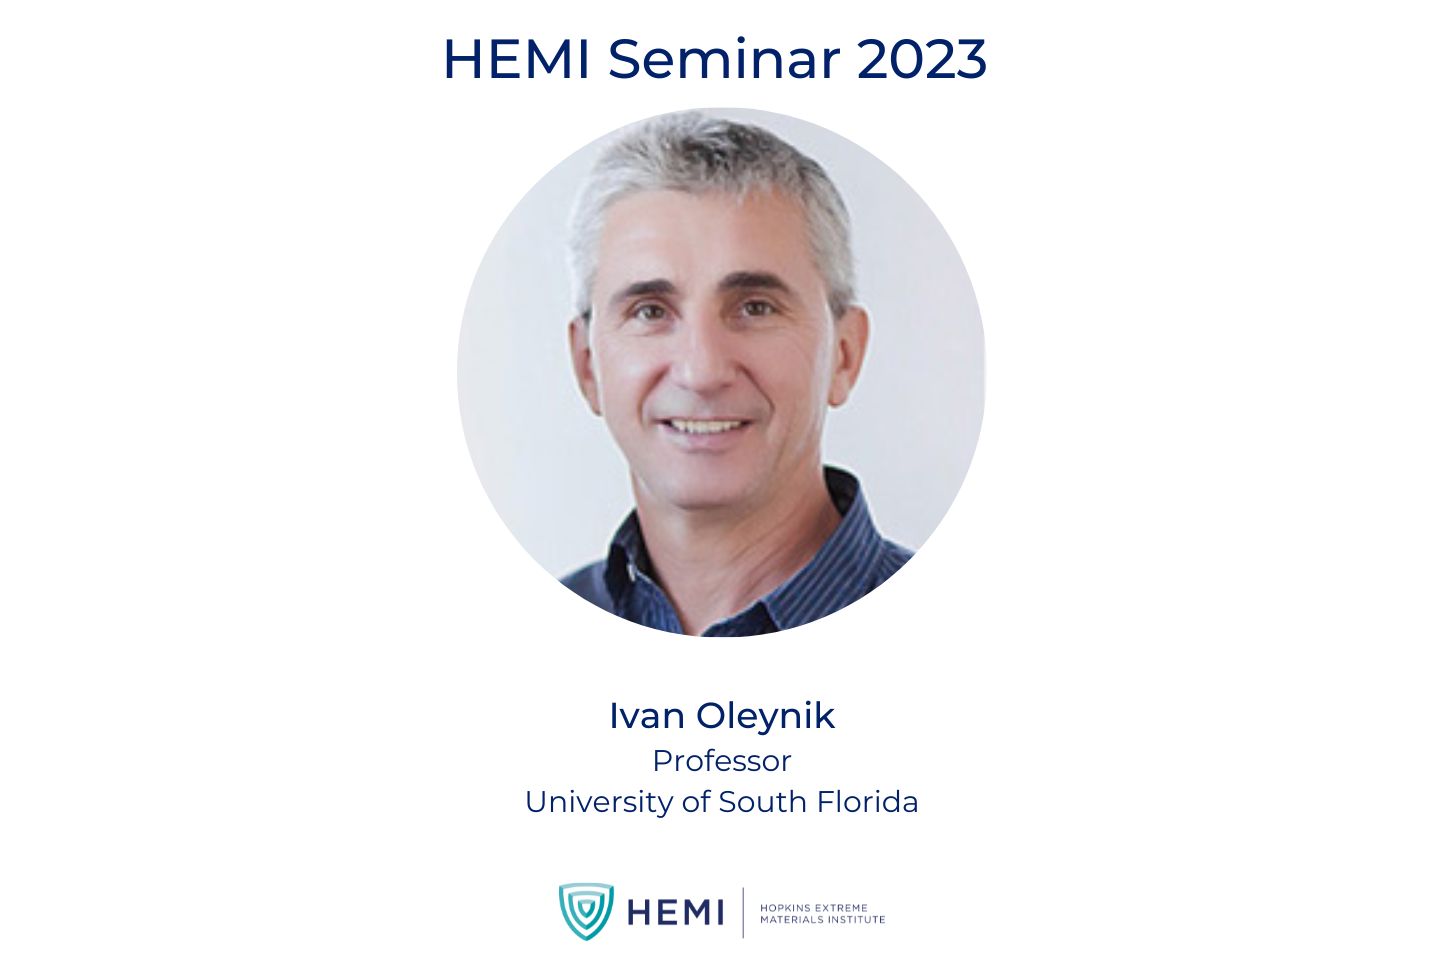 Ivan Oleynik headshot, HEMI logo with text: "HEMI Seminar 2023, Ivan Oleynik, Professor, University of South Florida."